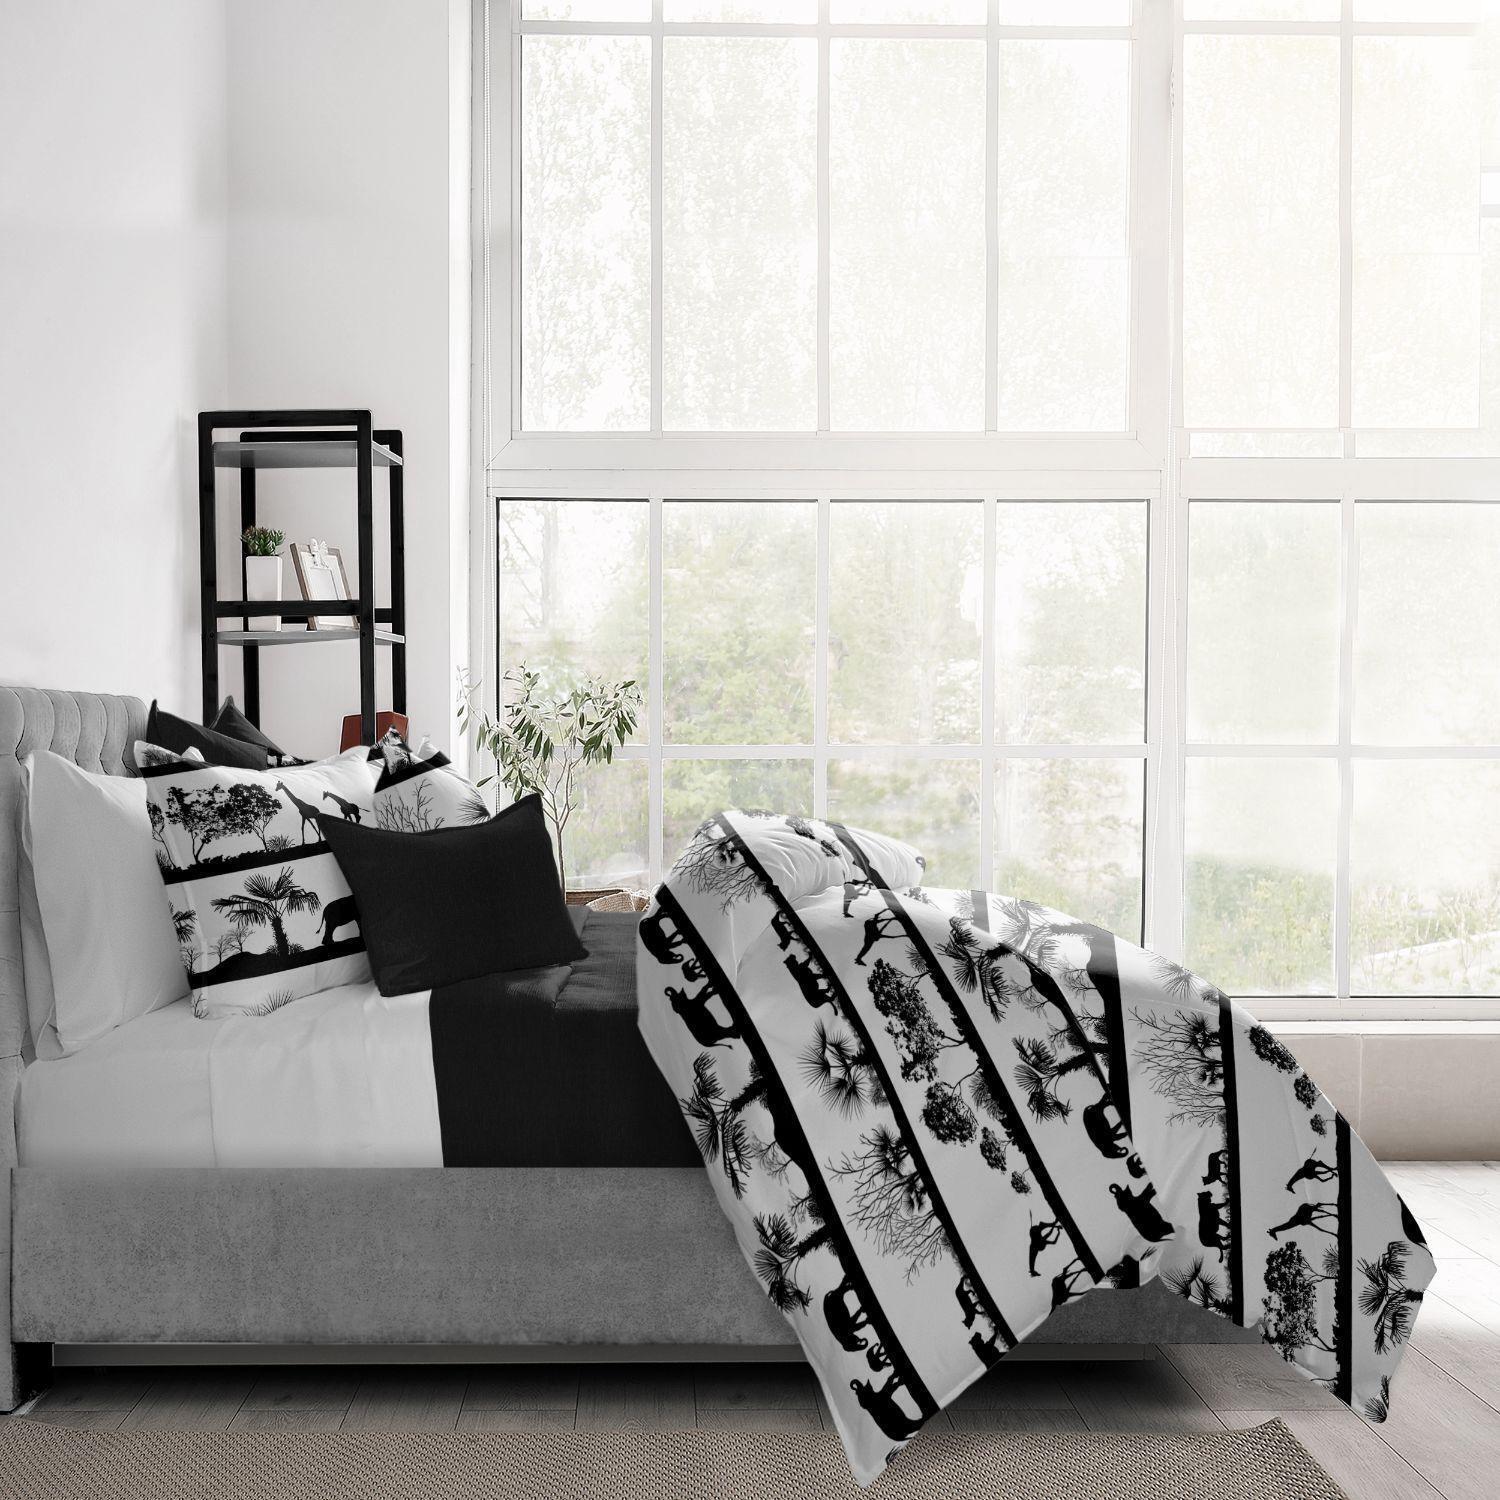 Set of 3 White and Black Sahara Comforter with Pillow Shams - California King alternate image